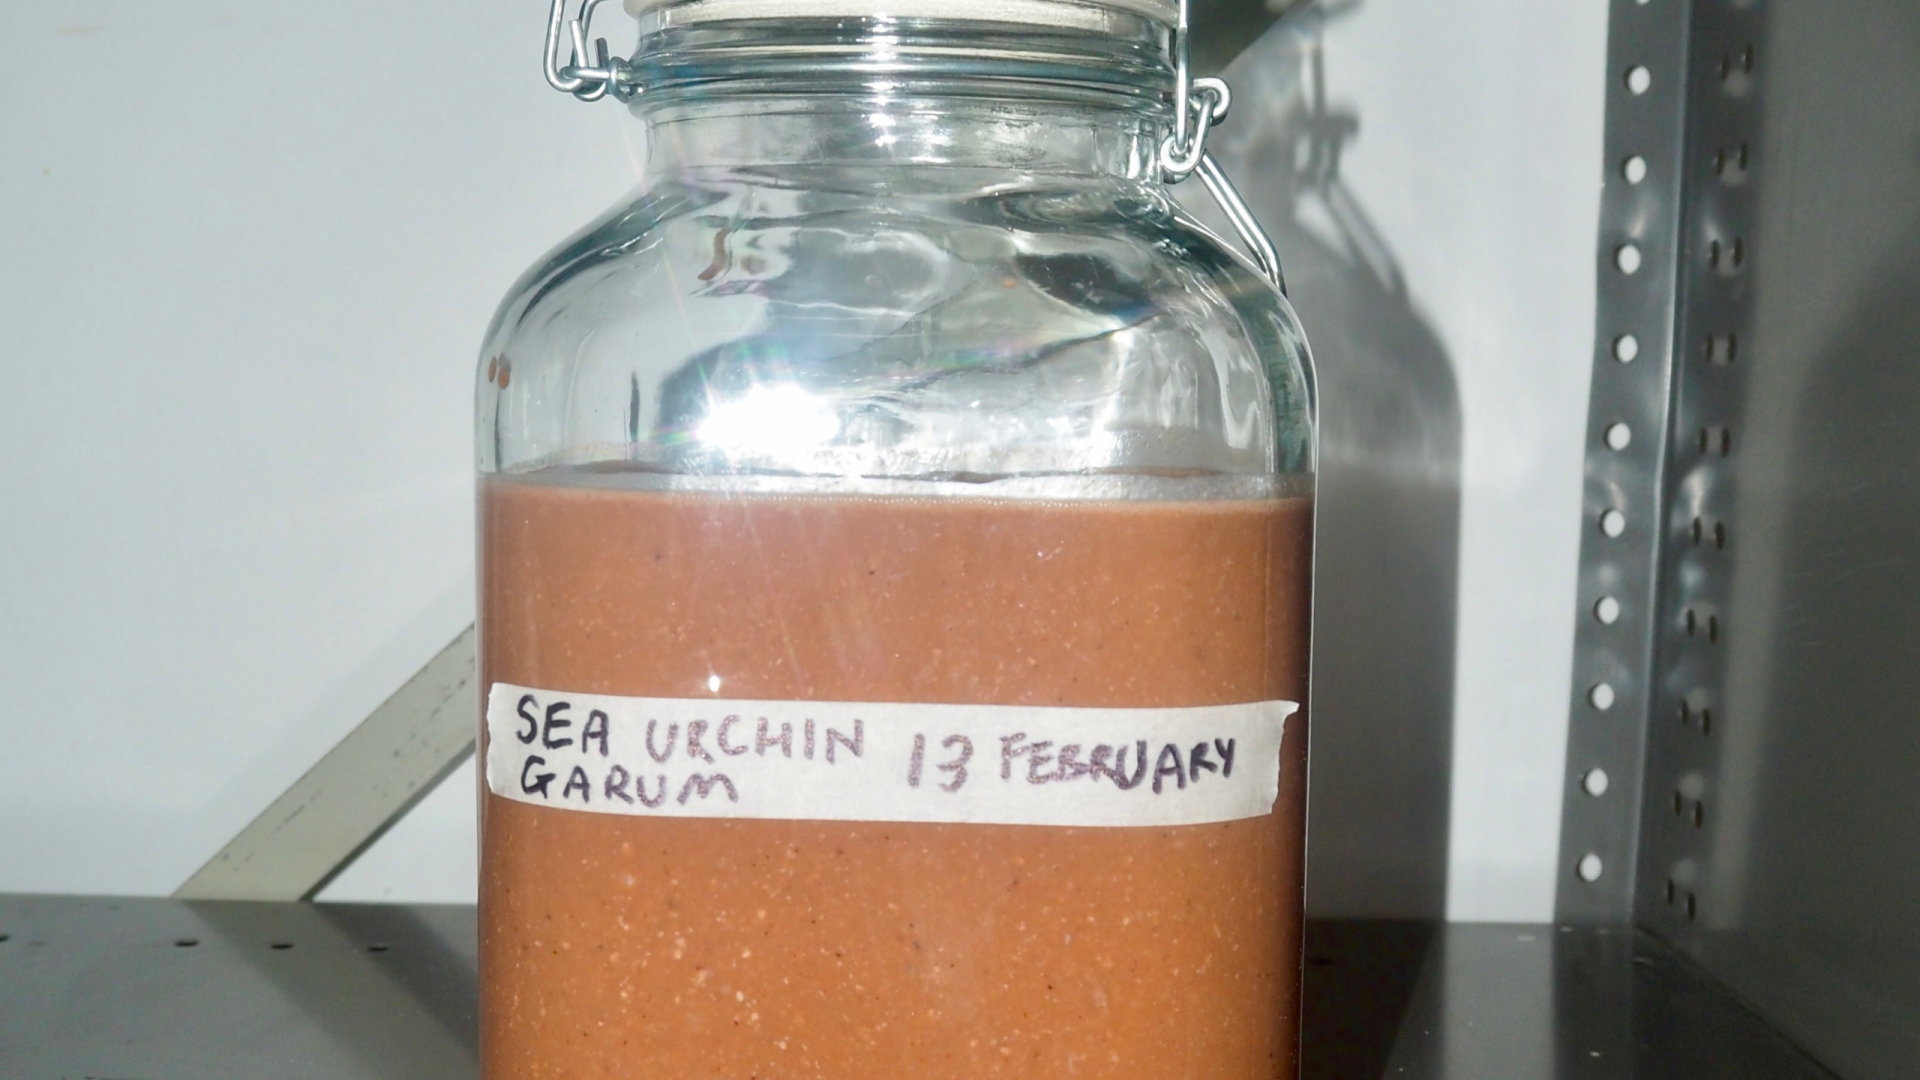 Air-tight glass jar on shelf containing orange garum liquid